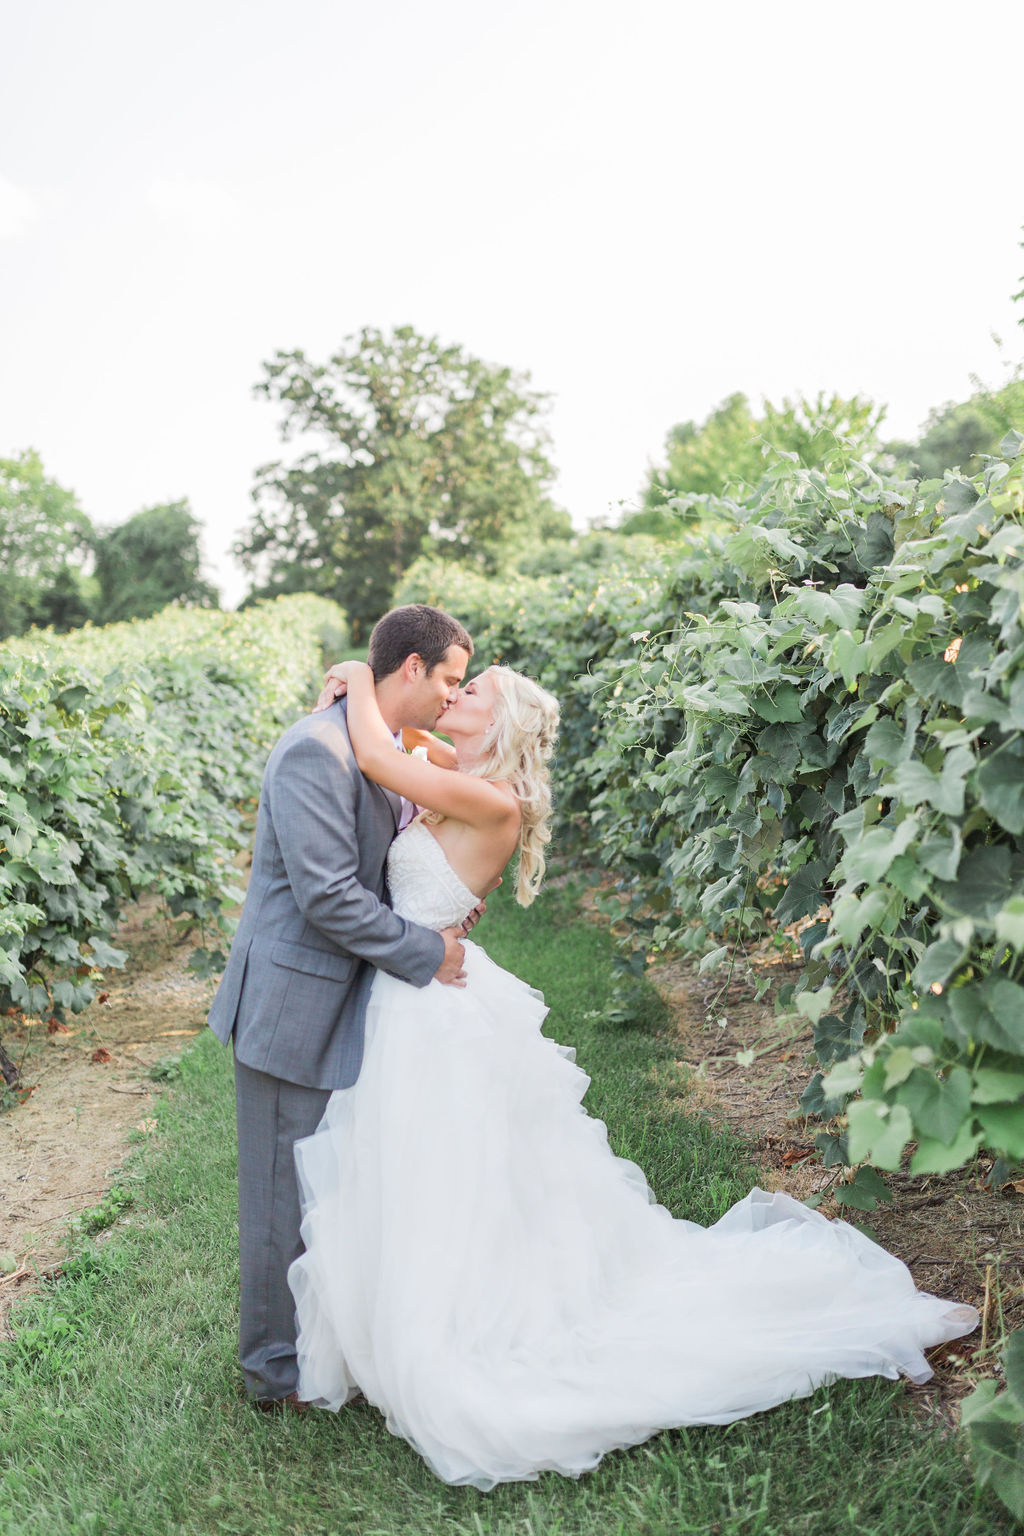 A Rustic Virginia Barn Wedding - Stable at Bluemont Vineyards Wedding - The Overwhelmed Bride Wedding Blog